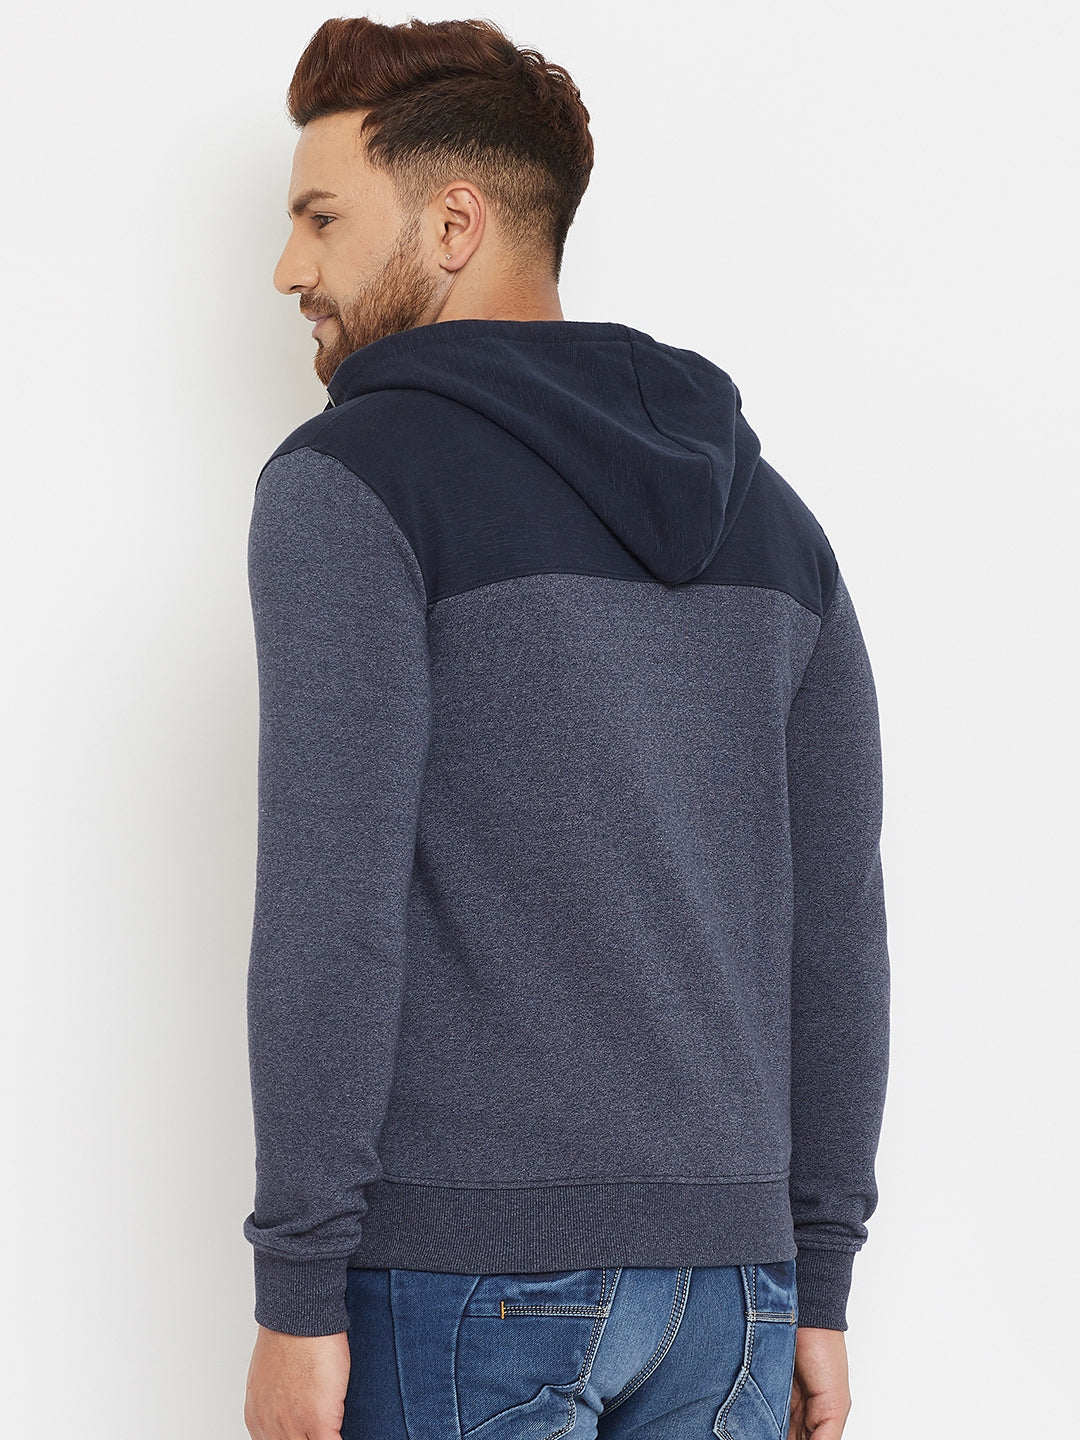 Blue Colorblocked Hooded Sweatshirt - Men Sweatshirts